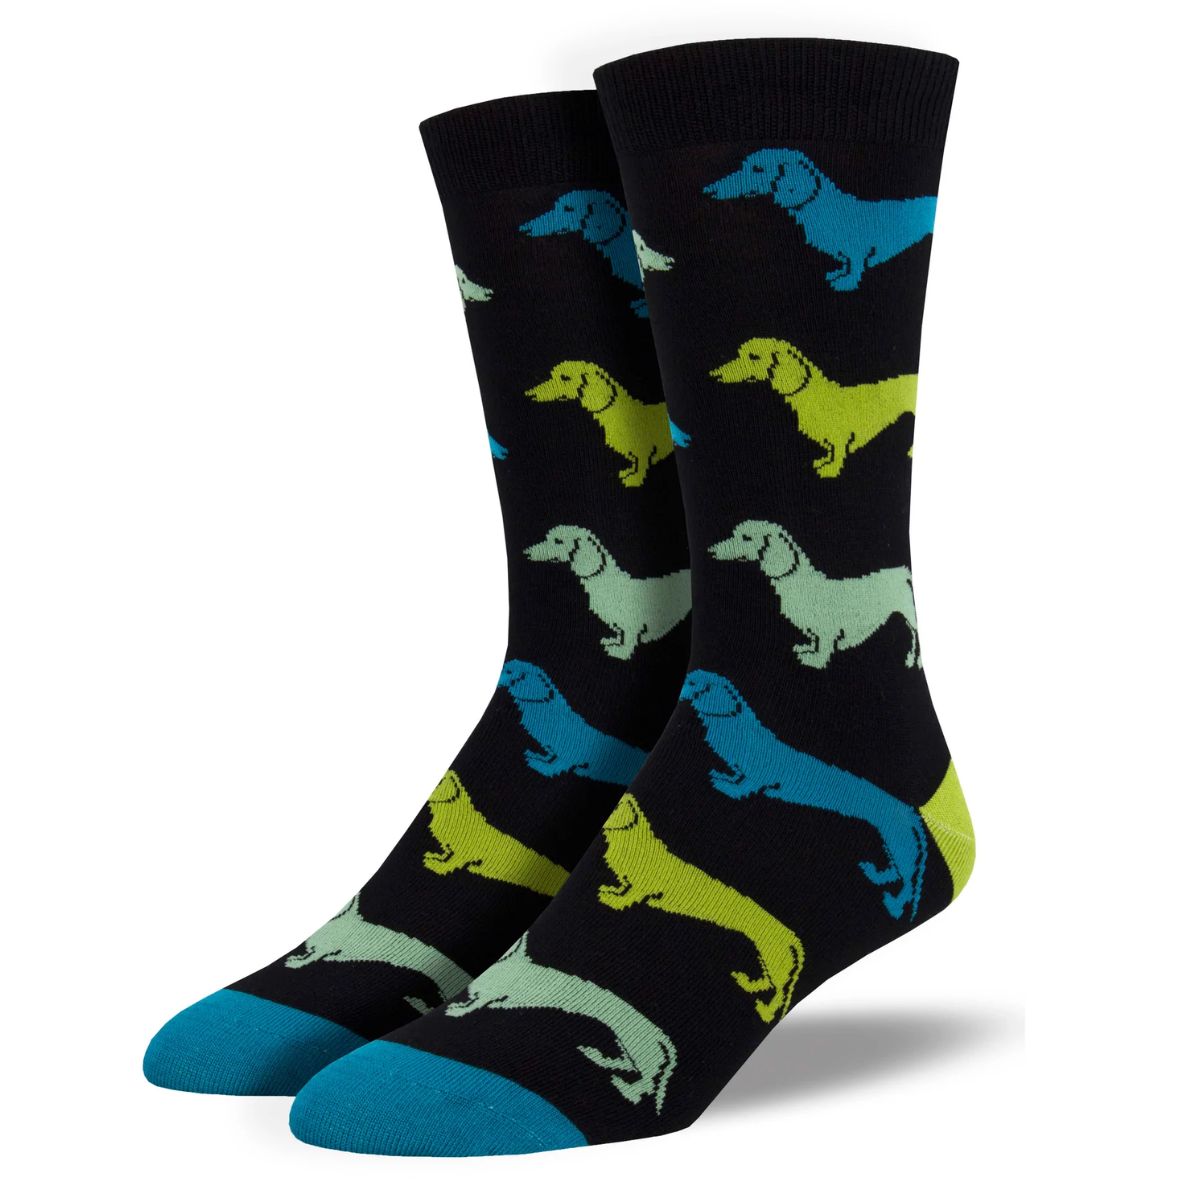 Dachshund socks a pair of black crew socks with blue and green dachshund dog print